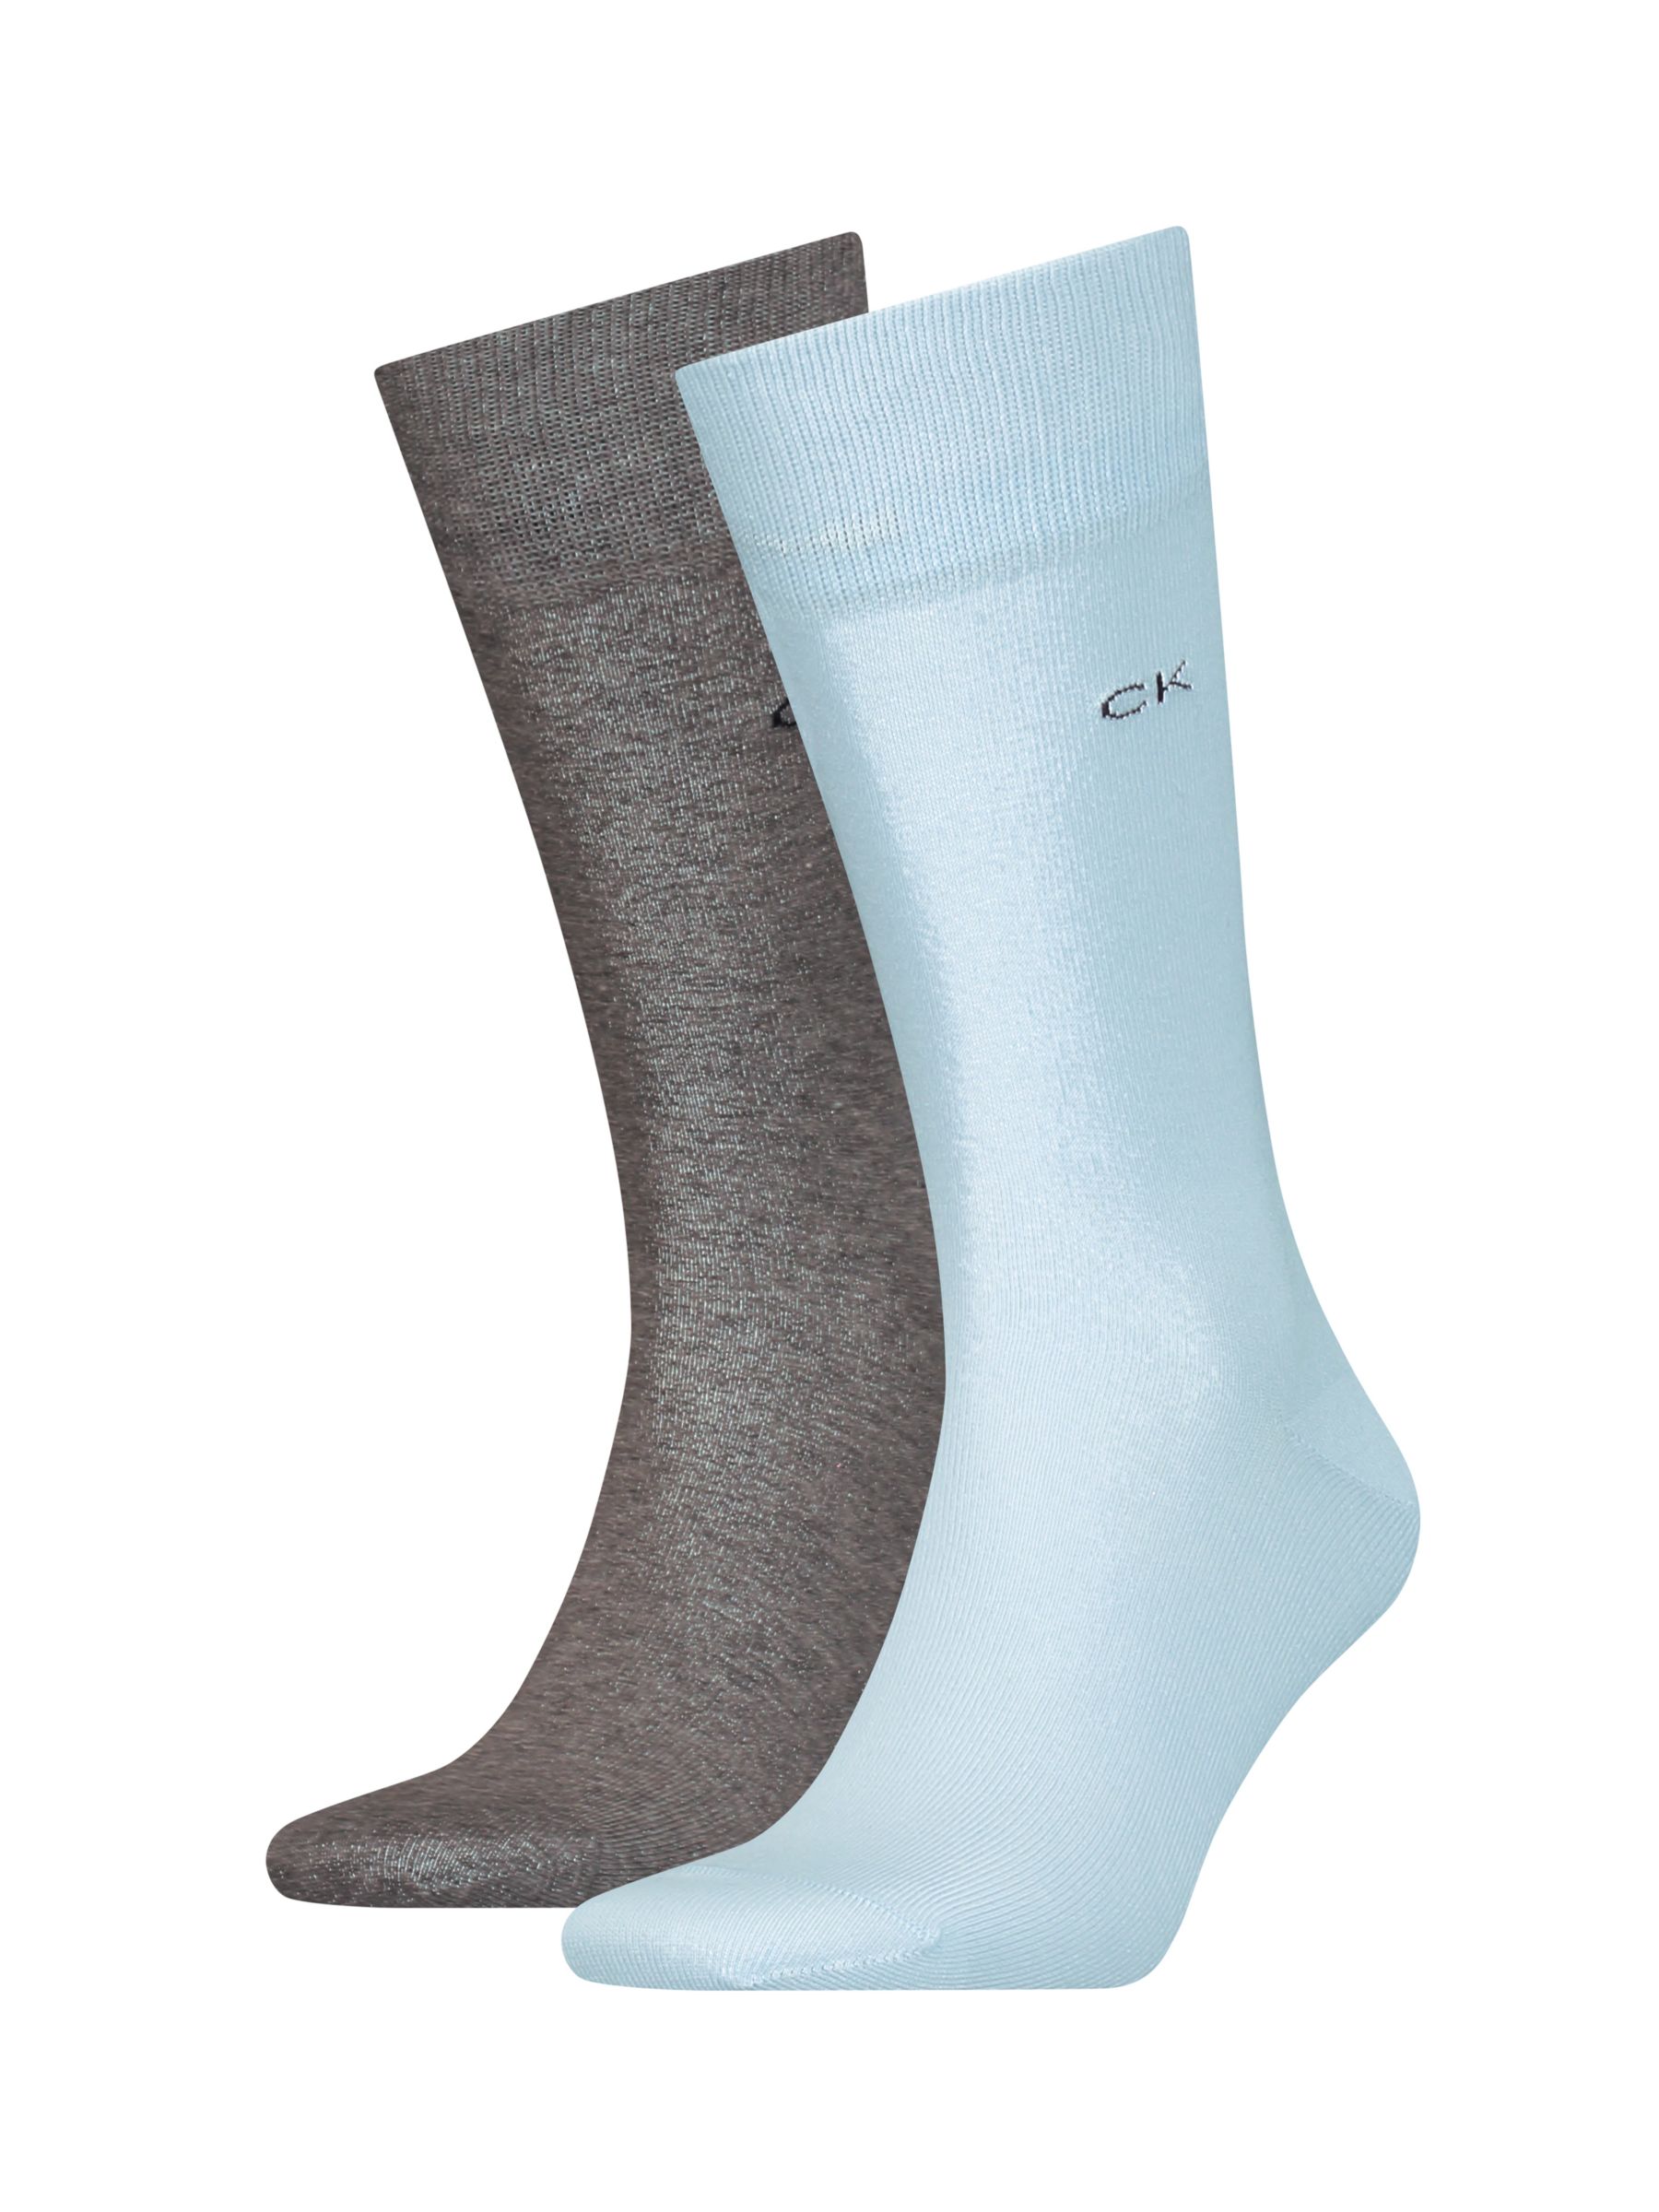 Calvin Klein Logo Crew Socks, One Size, Pack of 2, Blue/Grey at John ...